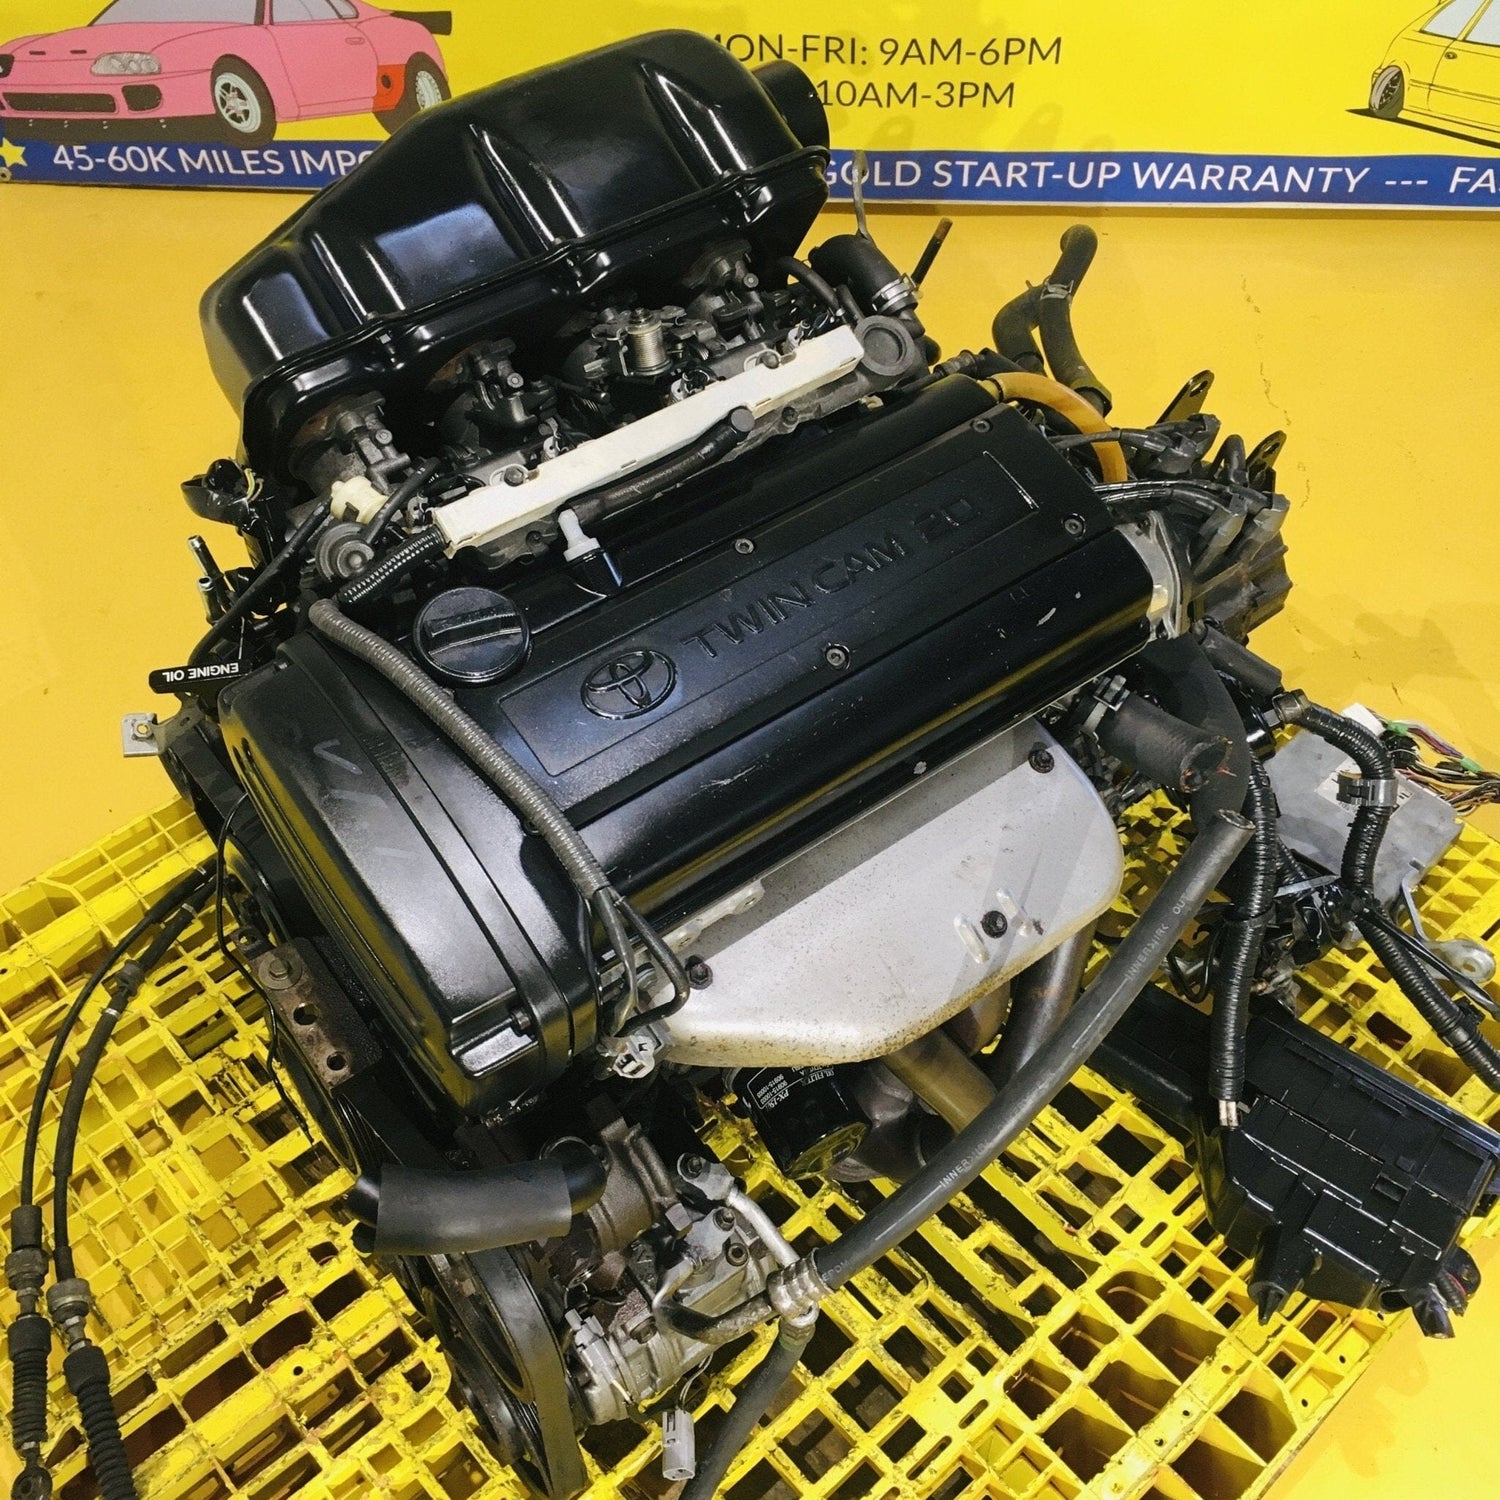 TOYOTA (1995-2002) 1.6l VVT BLACK TOP COMPLETE JDM ENGINE 5 SPEED SWAP 